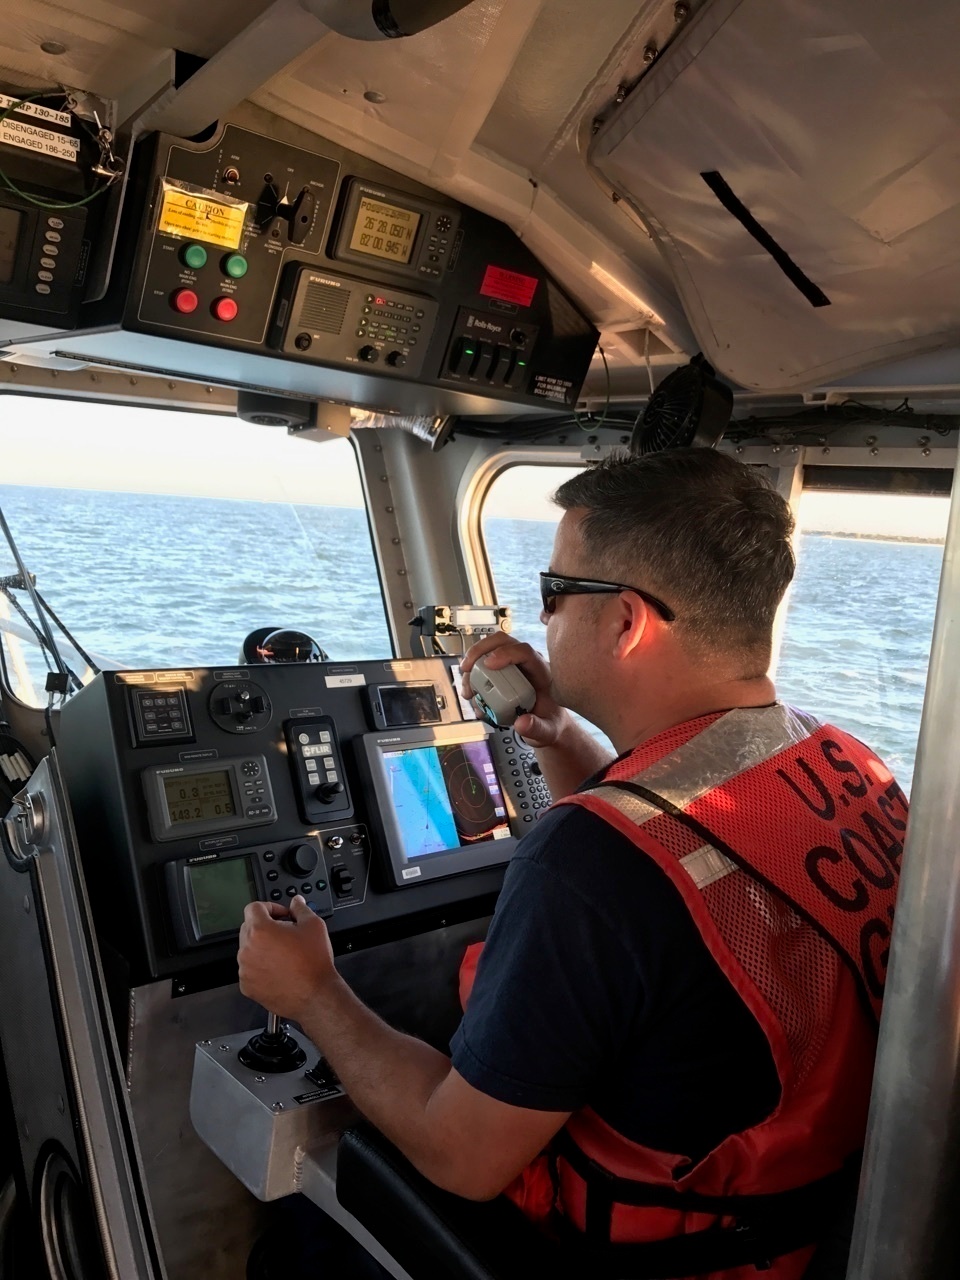 Coast Guard continues search for missing kayaker in San Carlos Bay, Florida